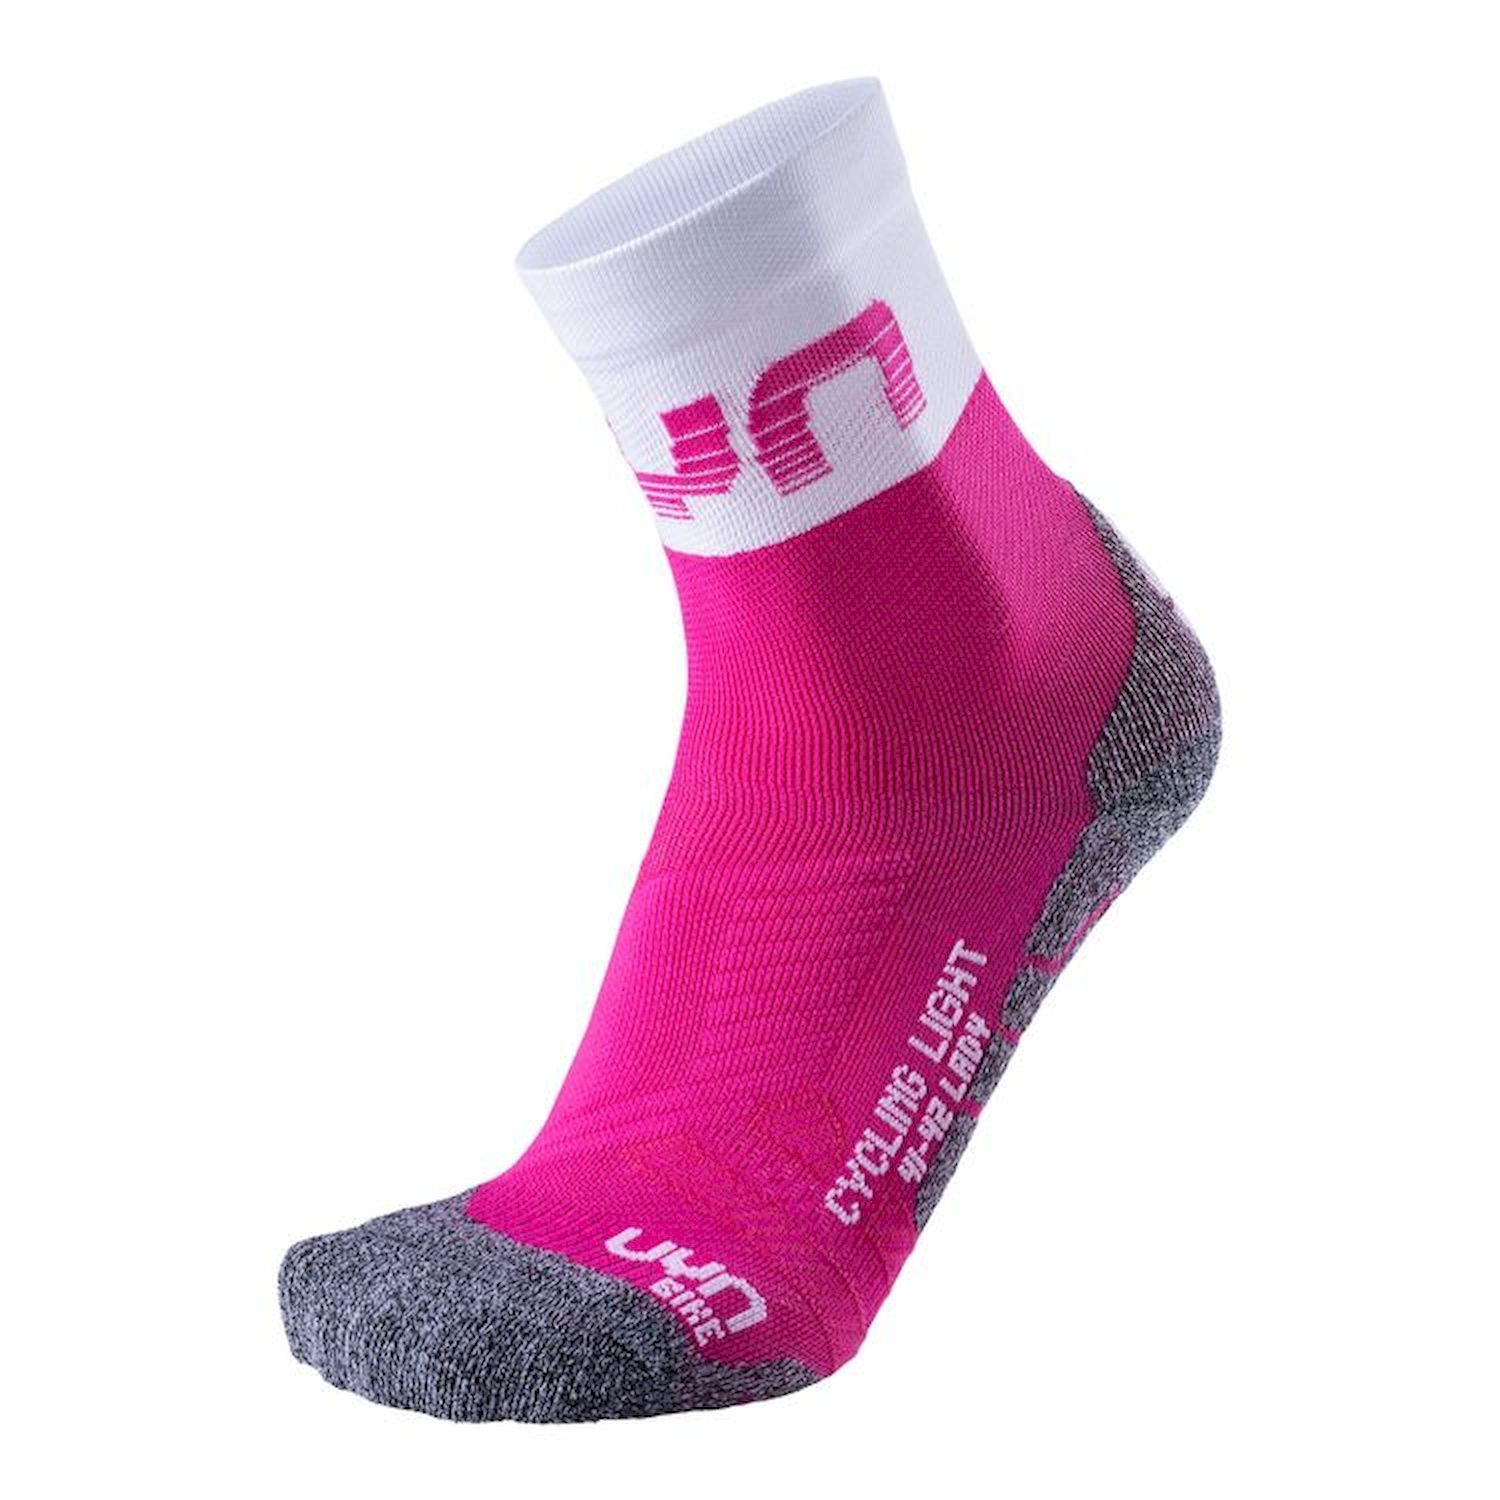 Uyn Cycling Light Socks - Calze ciclismo - Donna